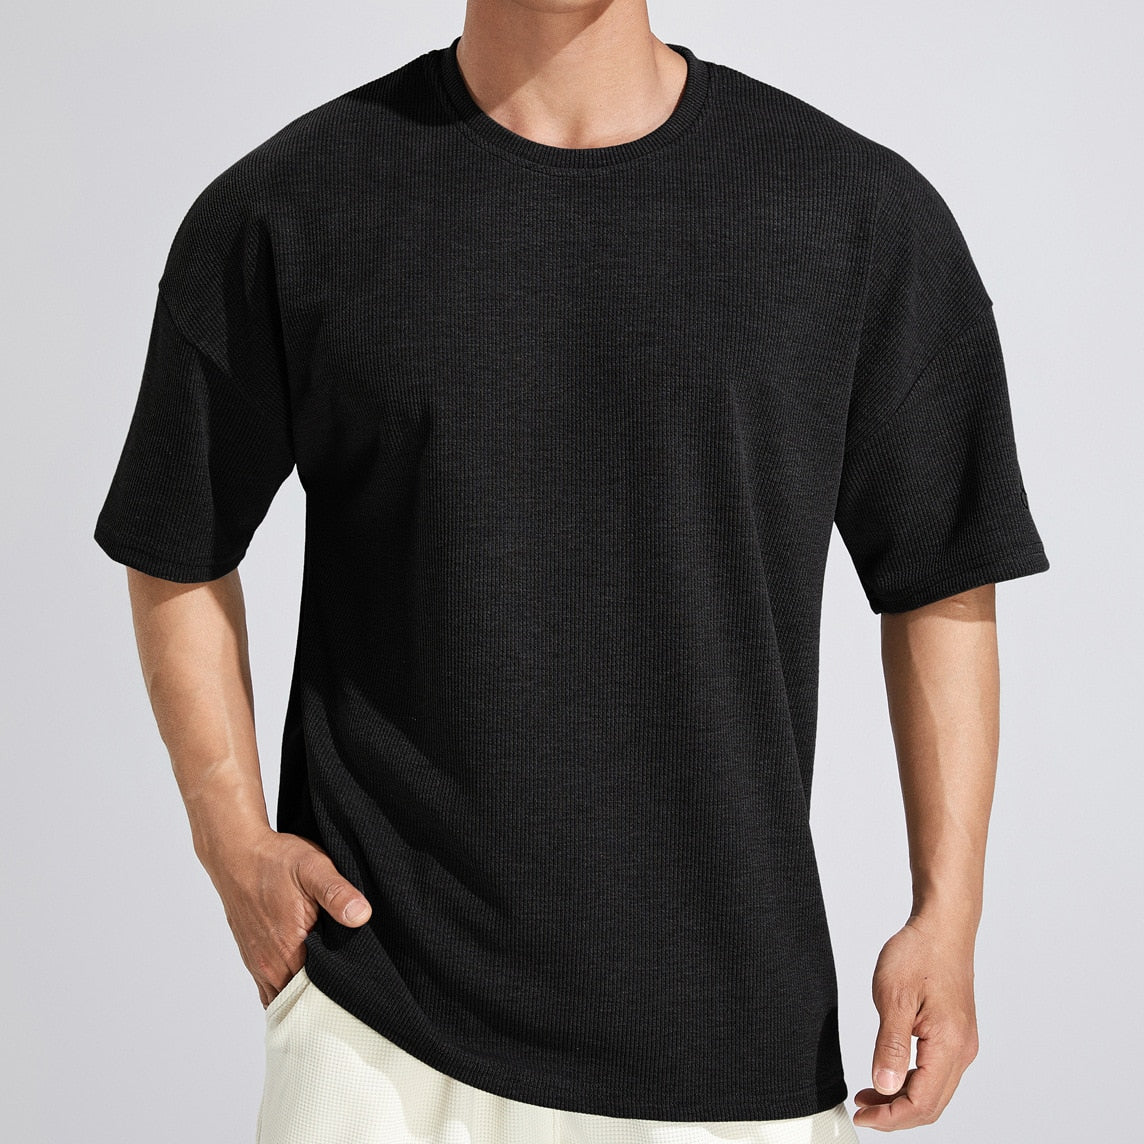 Summer Casual Loose T-shirt Men Short Sleeve Shirt Male Fashion Hip Hop Tee Tops Streetwear Solid Stripes Corduroy Clothing